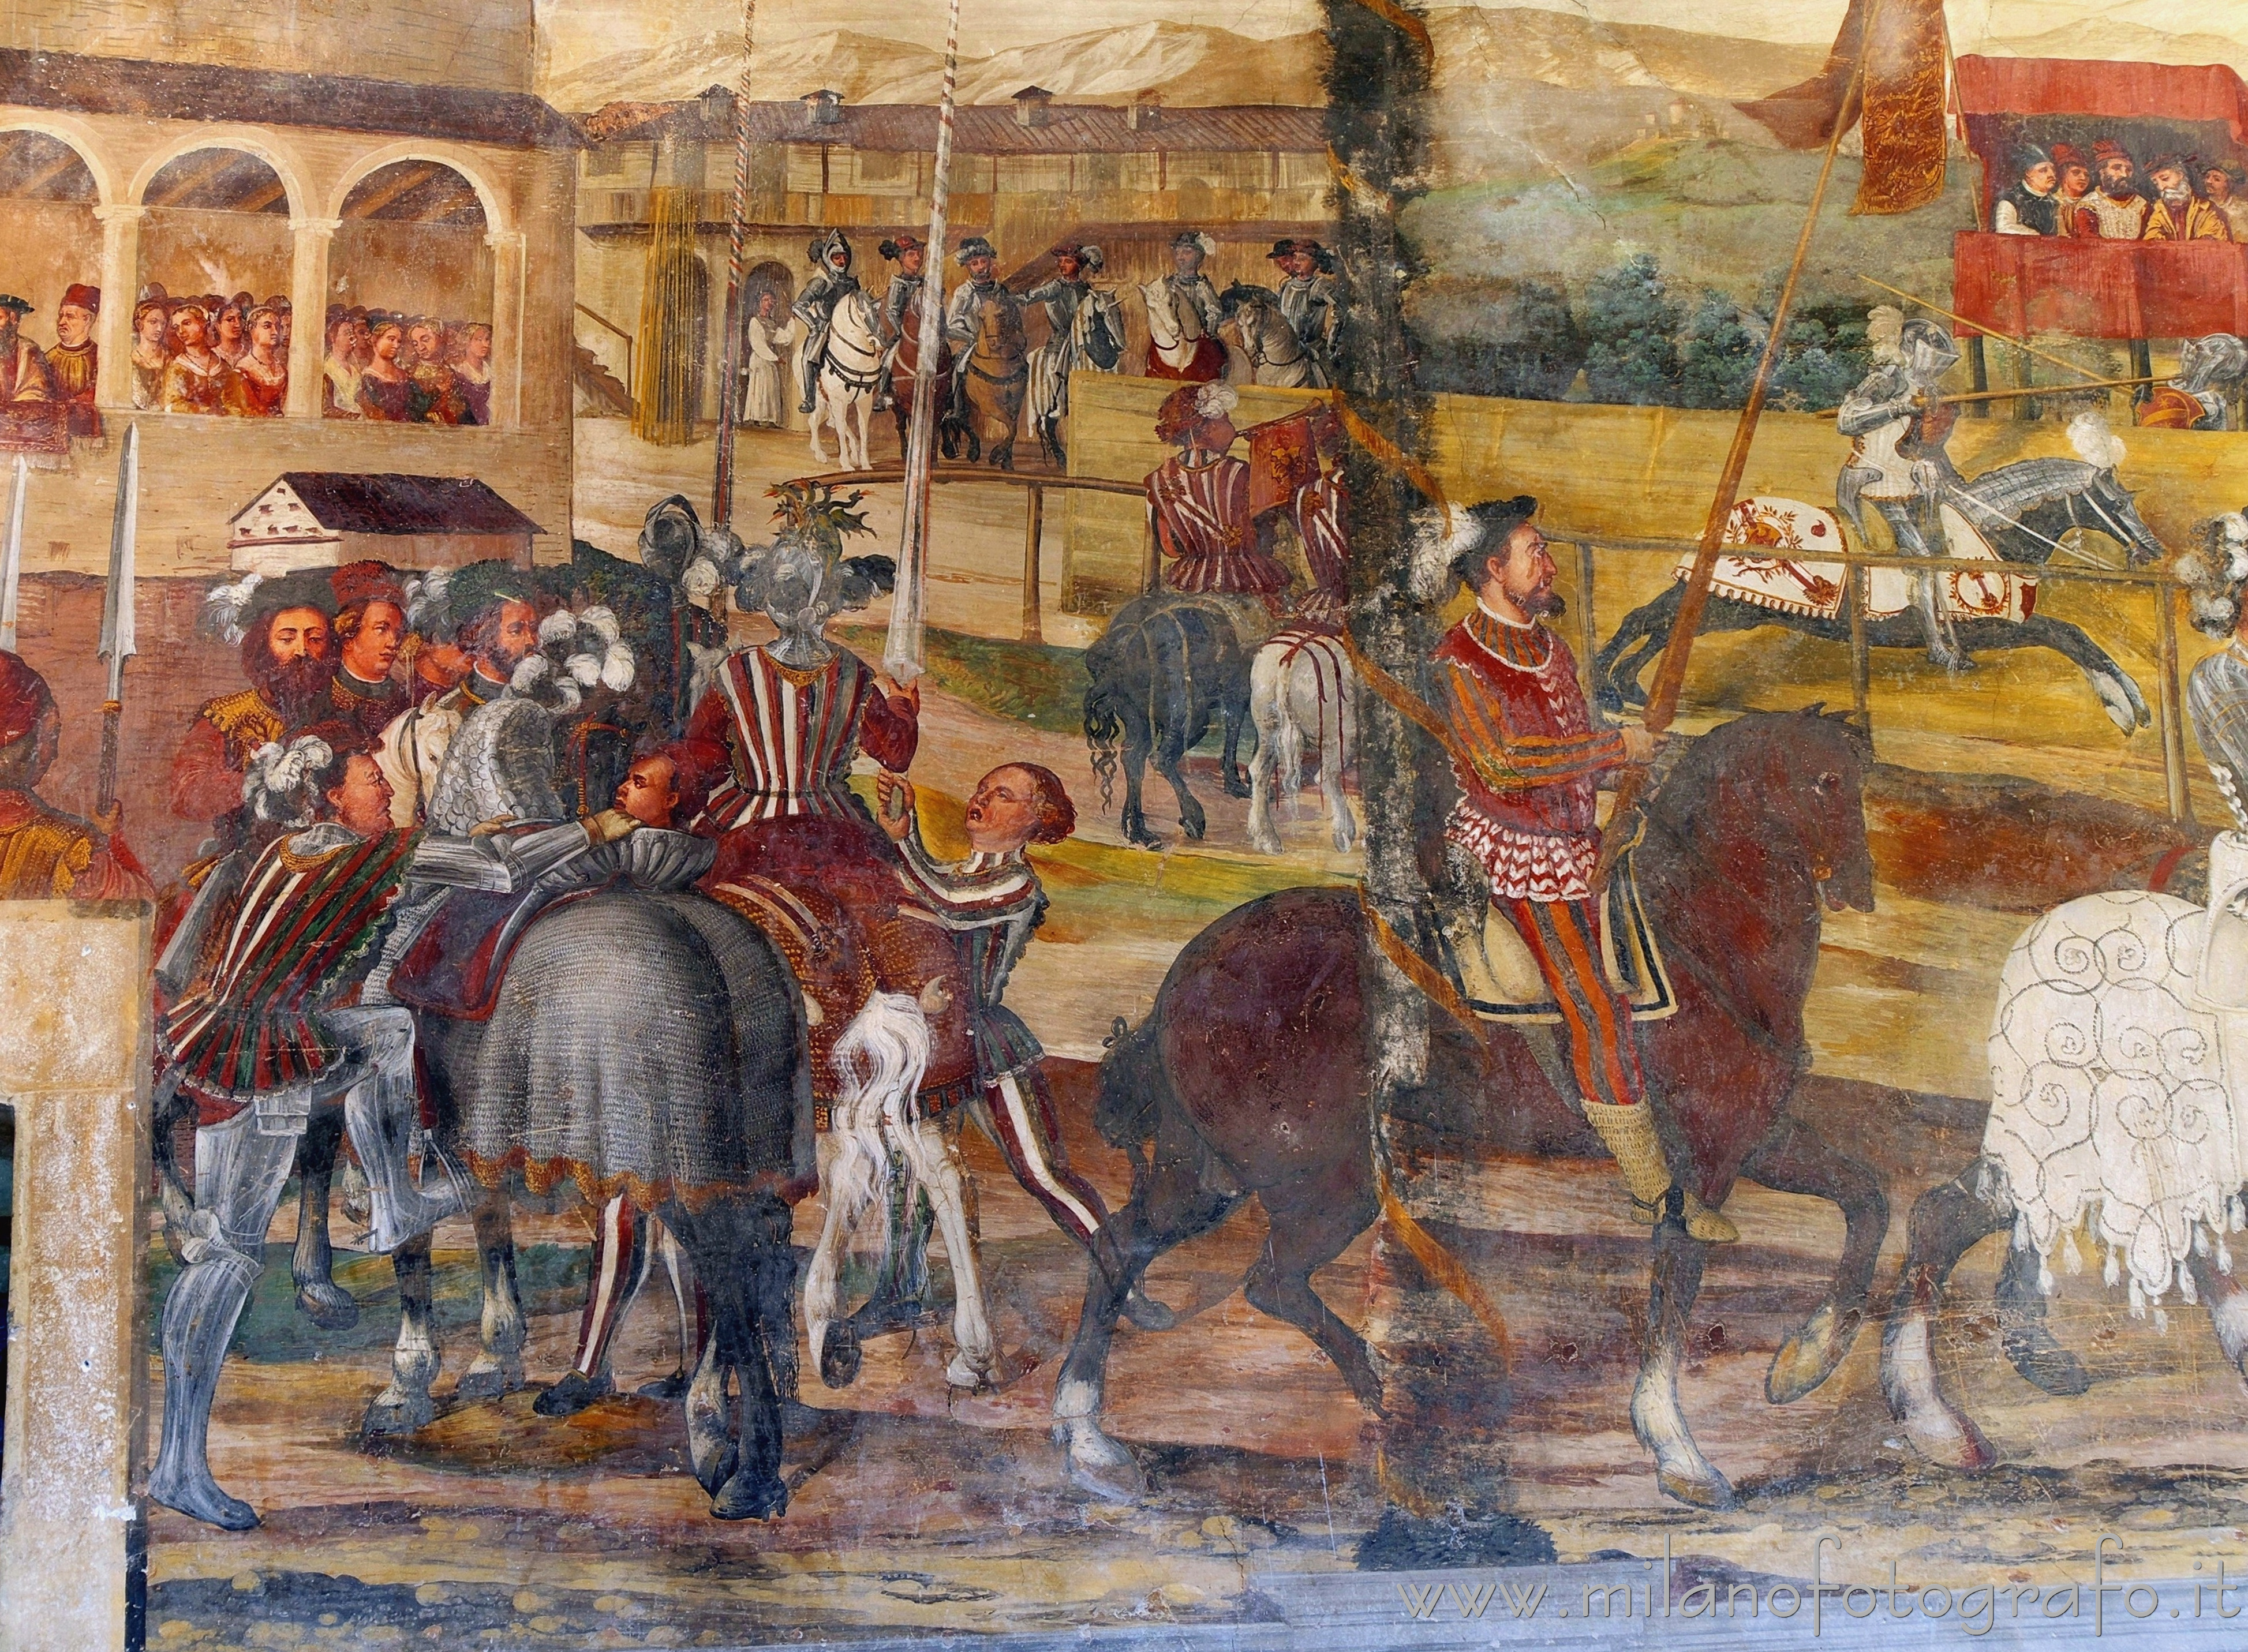 Cavernago (Bergamo, Italy): Fresco in the Malpaga Castle depicting a tournament - Cavernago (Bergamo, Italy)